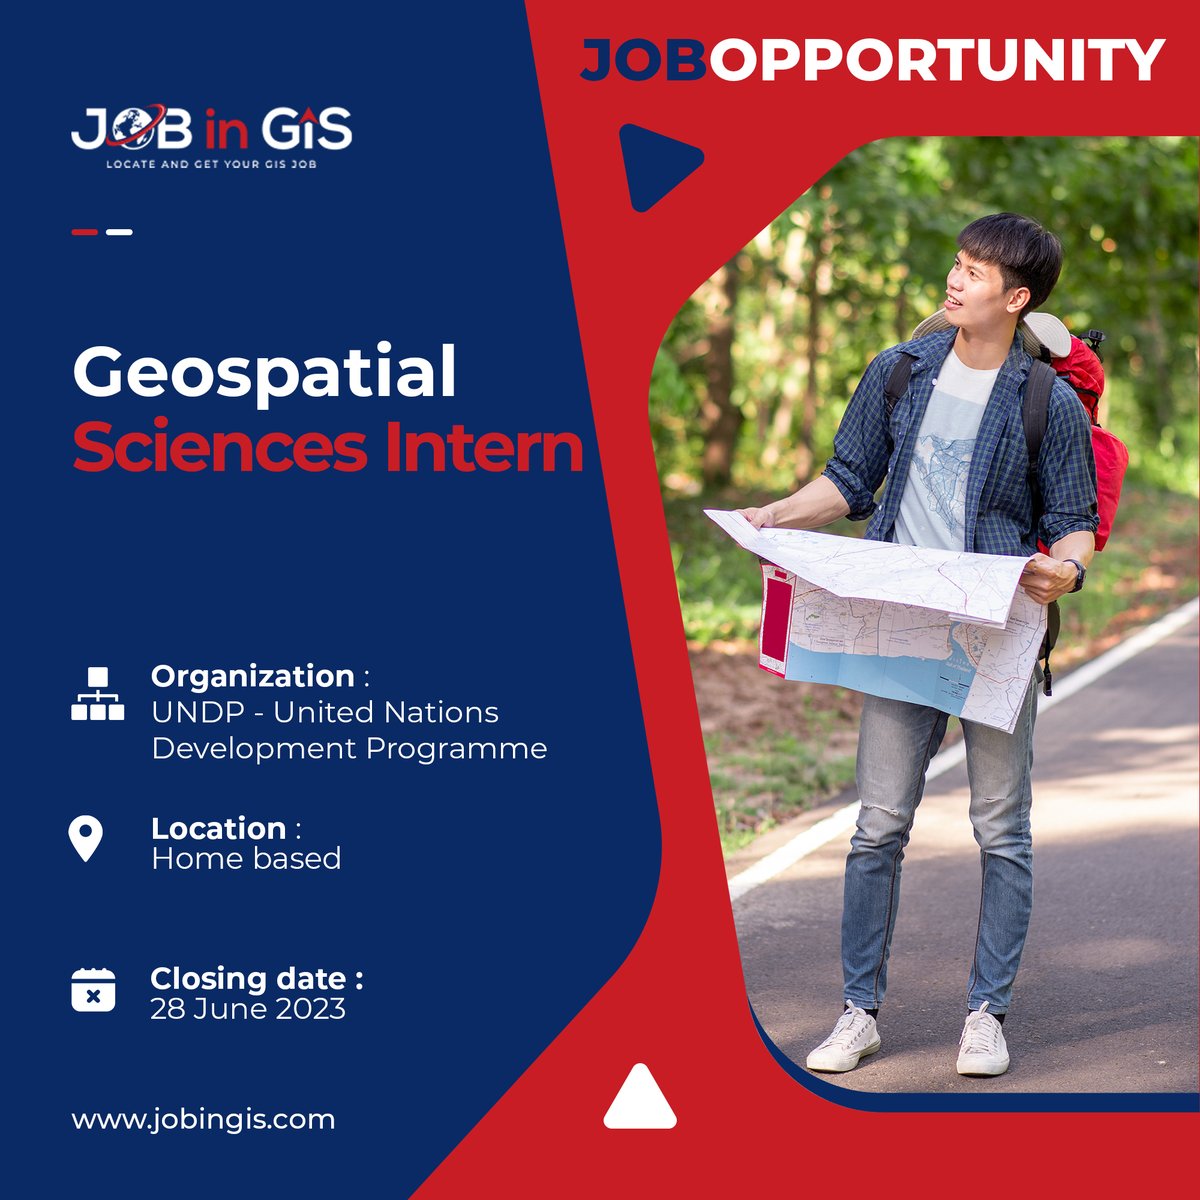 #jobingis : UNDP - United Nations Development Programme is hiring a Geospatial Sciences Intern
📍: #HomeBased

Apply here 👉 : jobingis.com/jobs/geospatia…

#Jobs #jobsearch #cartography #Geography #mapping #GIS #geospatial #remotesensing #gisjobs #gischat #remotejobs